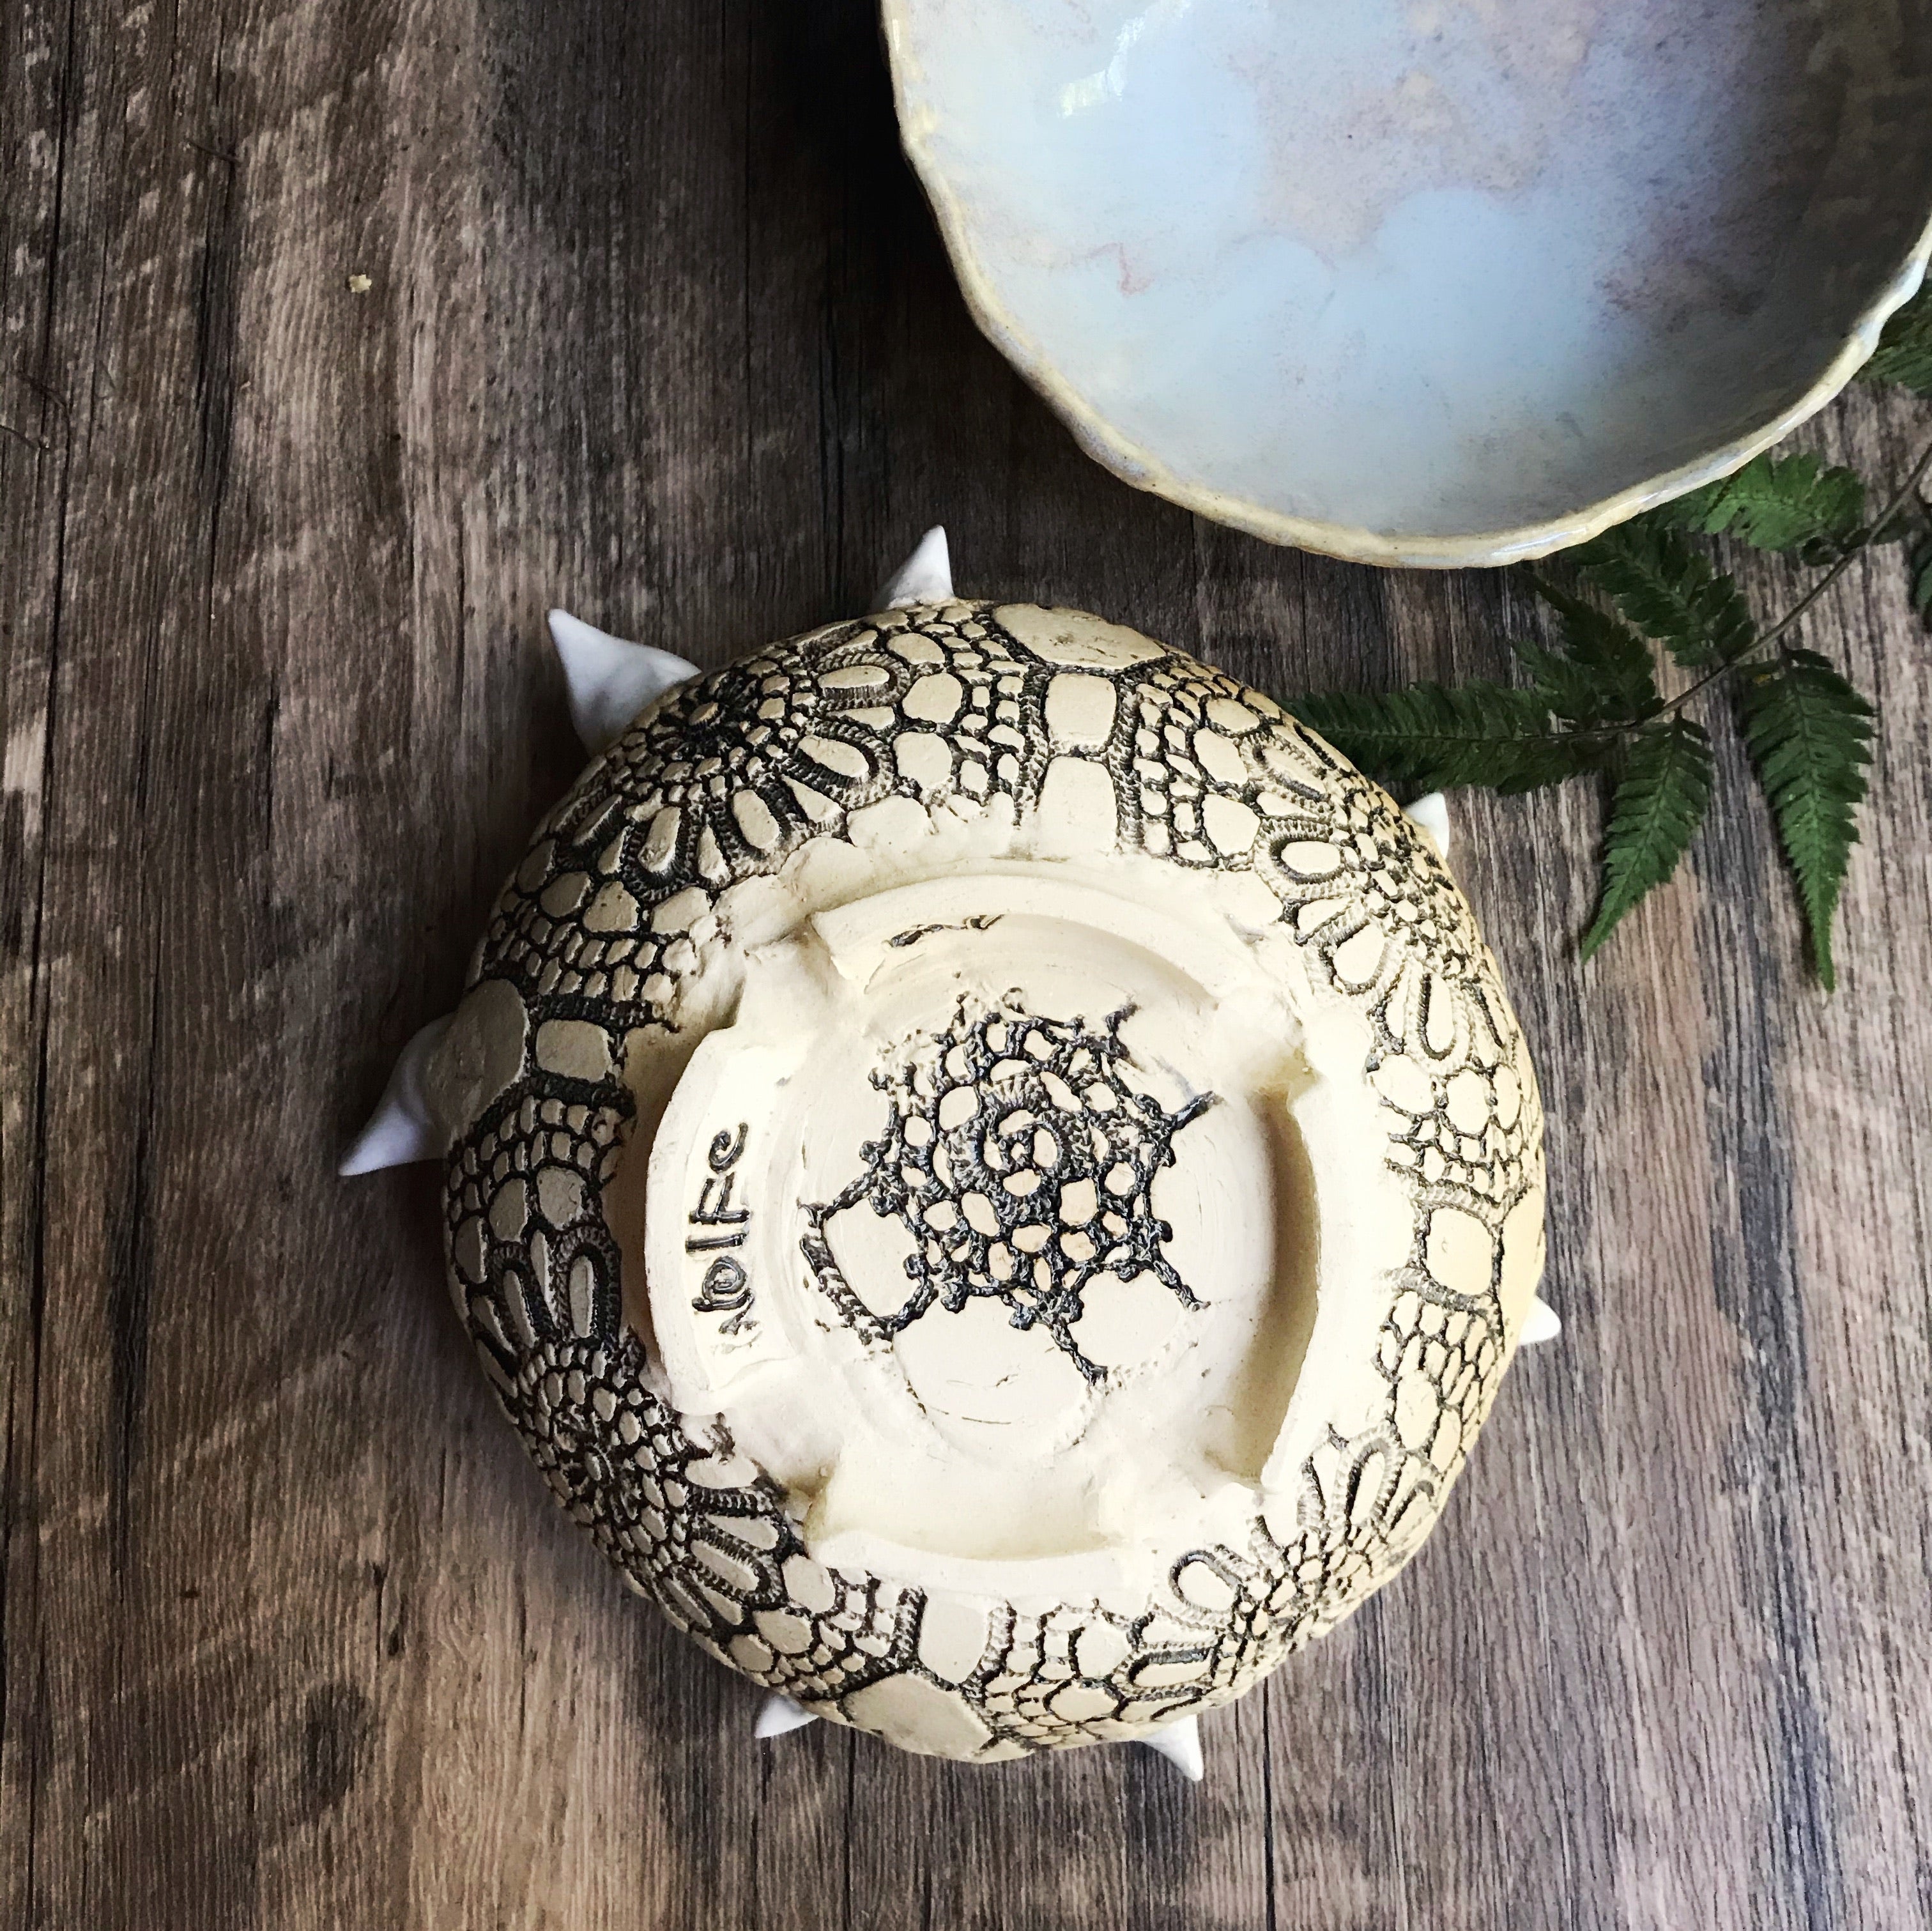 Family Bowl- for your family handbuilt ceramic bowl